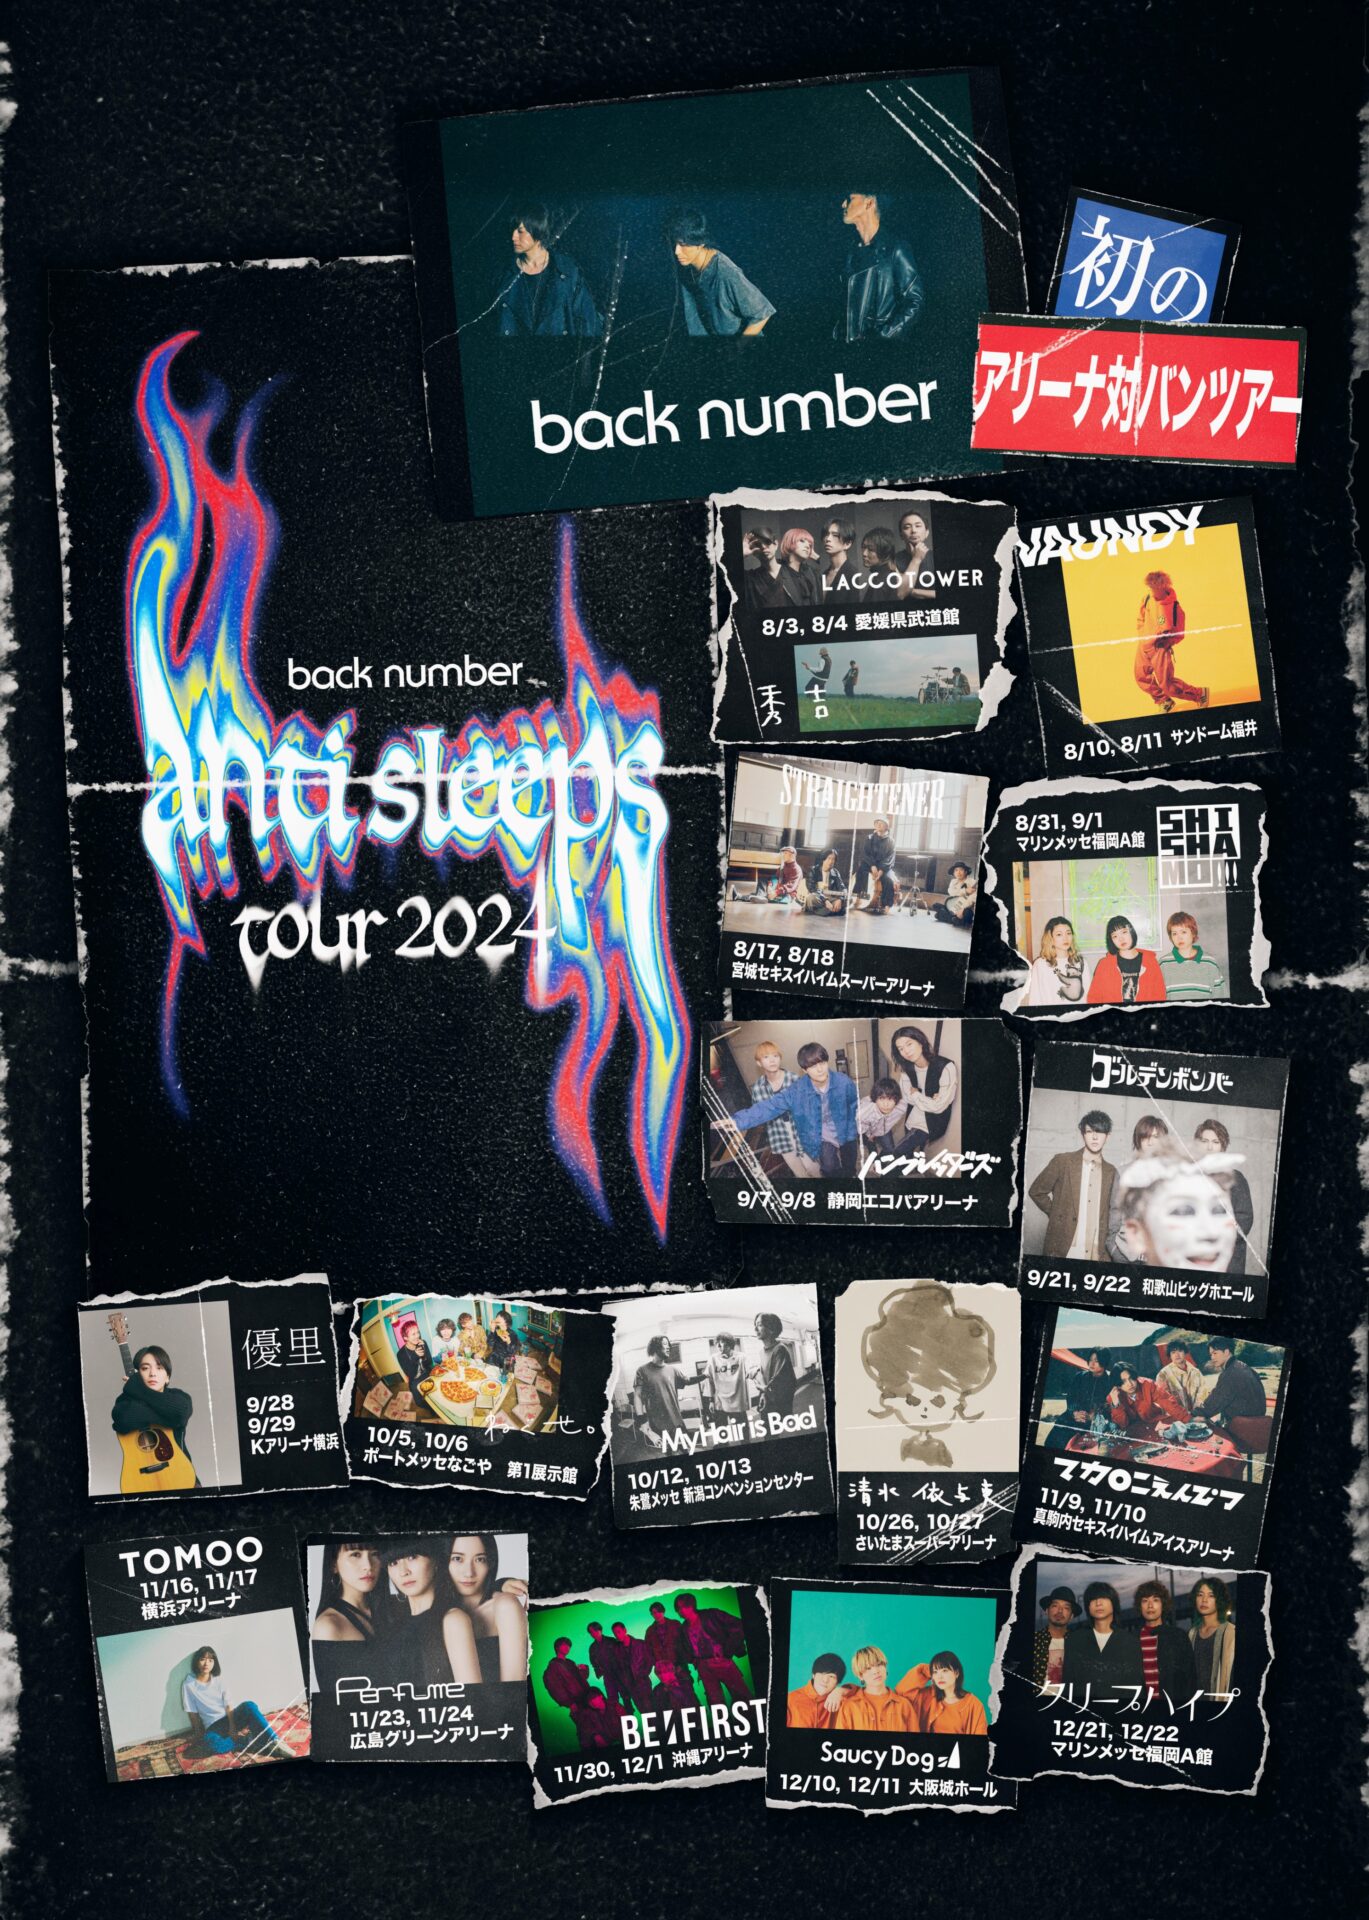 back number ツアー「“anti Sleeps tour 2024”」